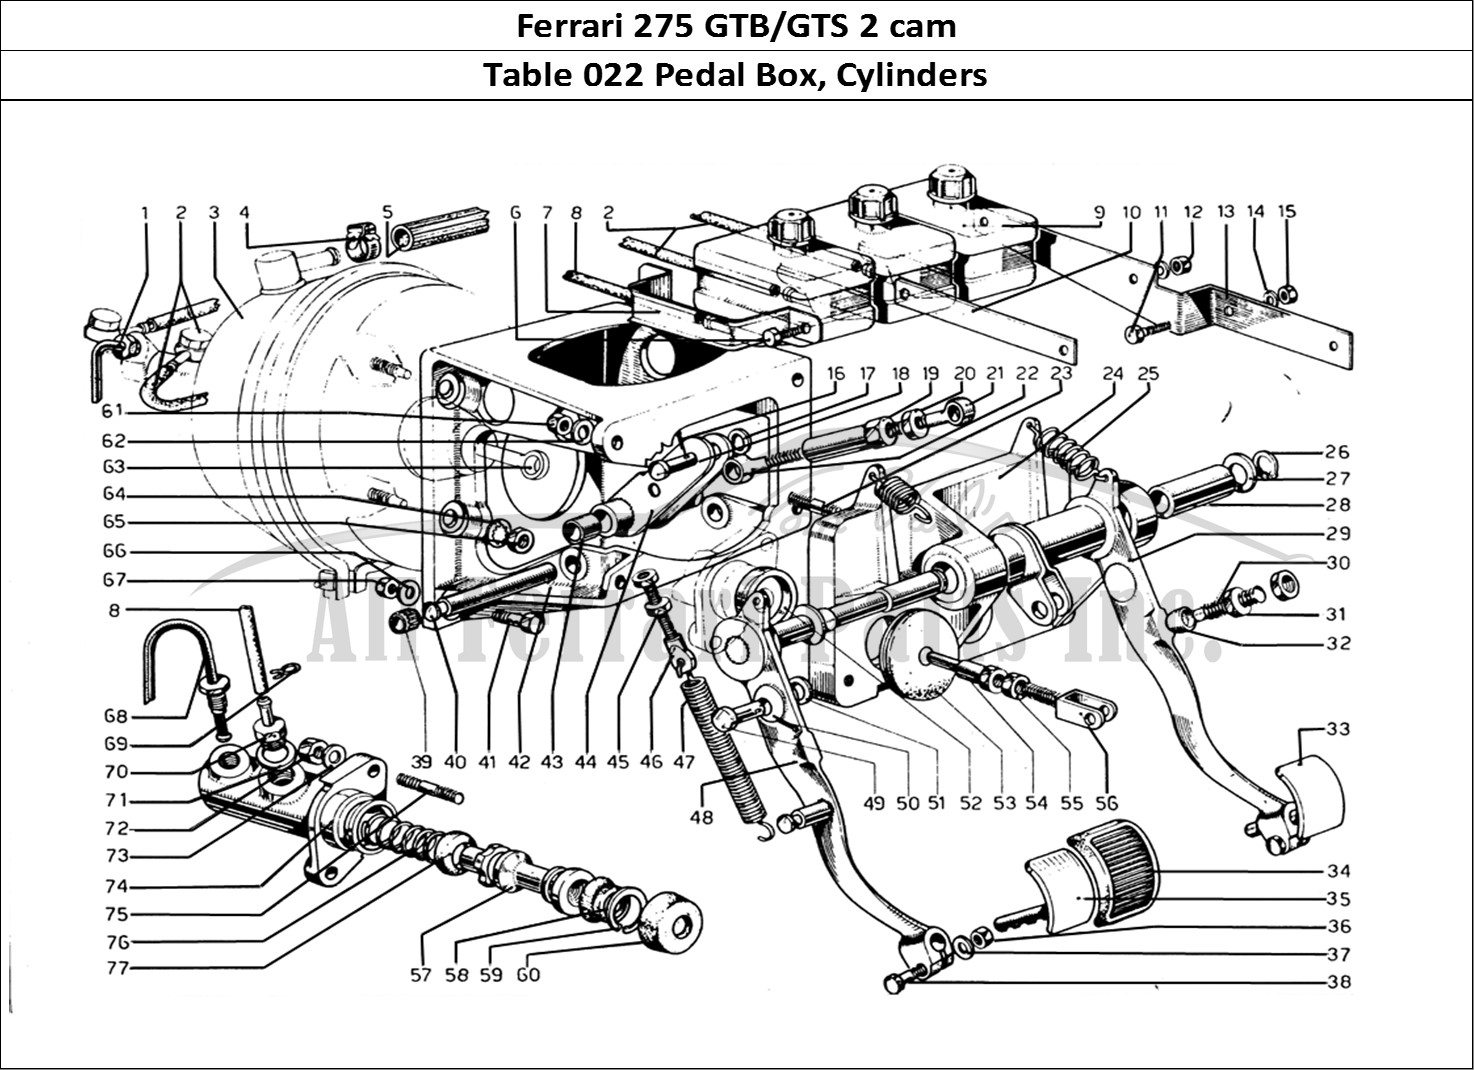 Ferrari Parts Ferrari 275 GTB/GTS 2 cam Page 022 Pedal Box